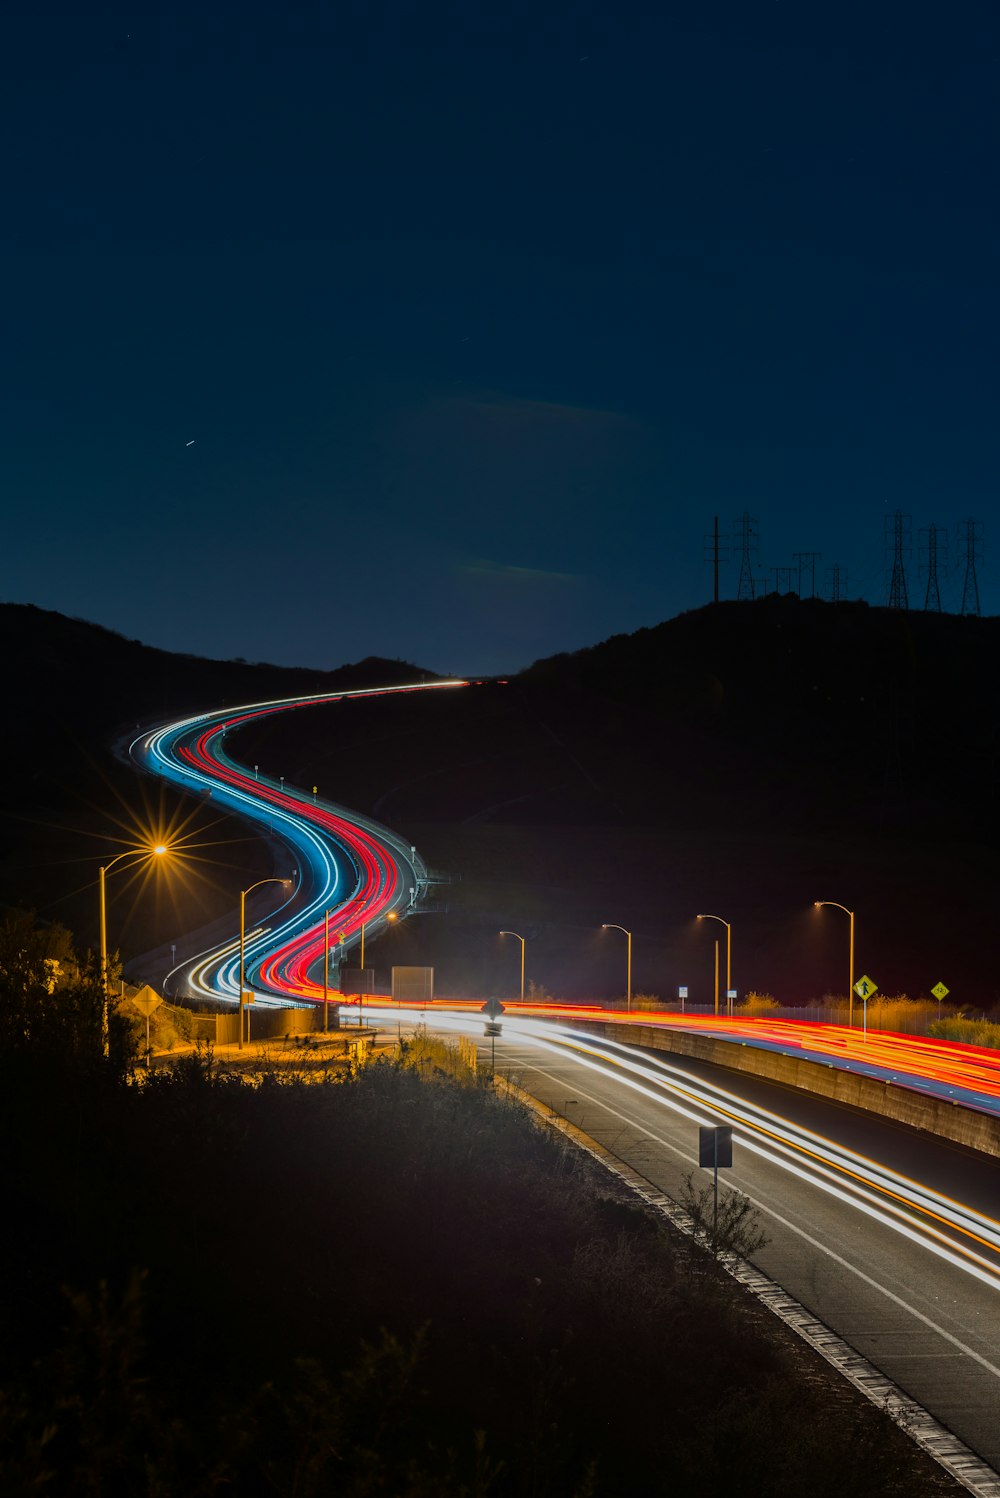 long-exposure photograph of road at night